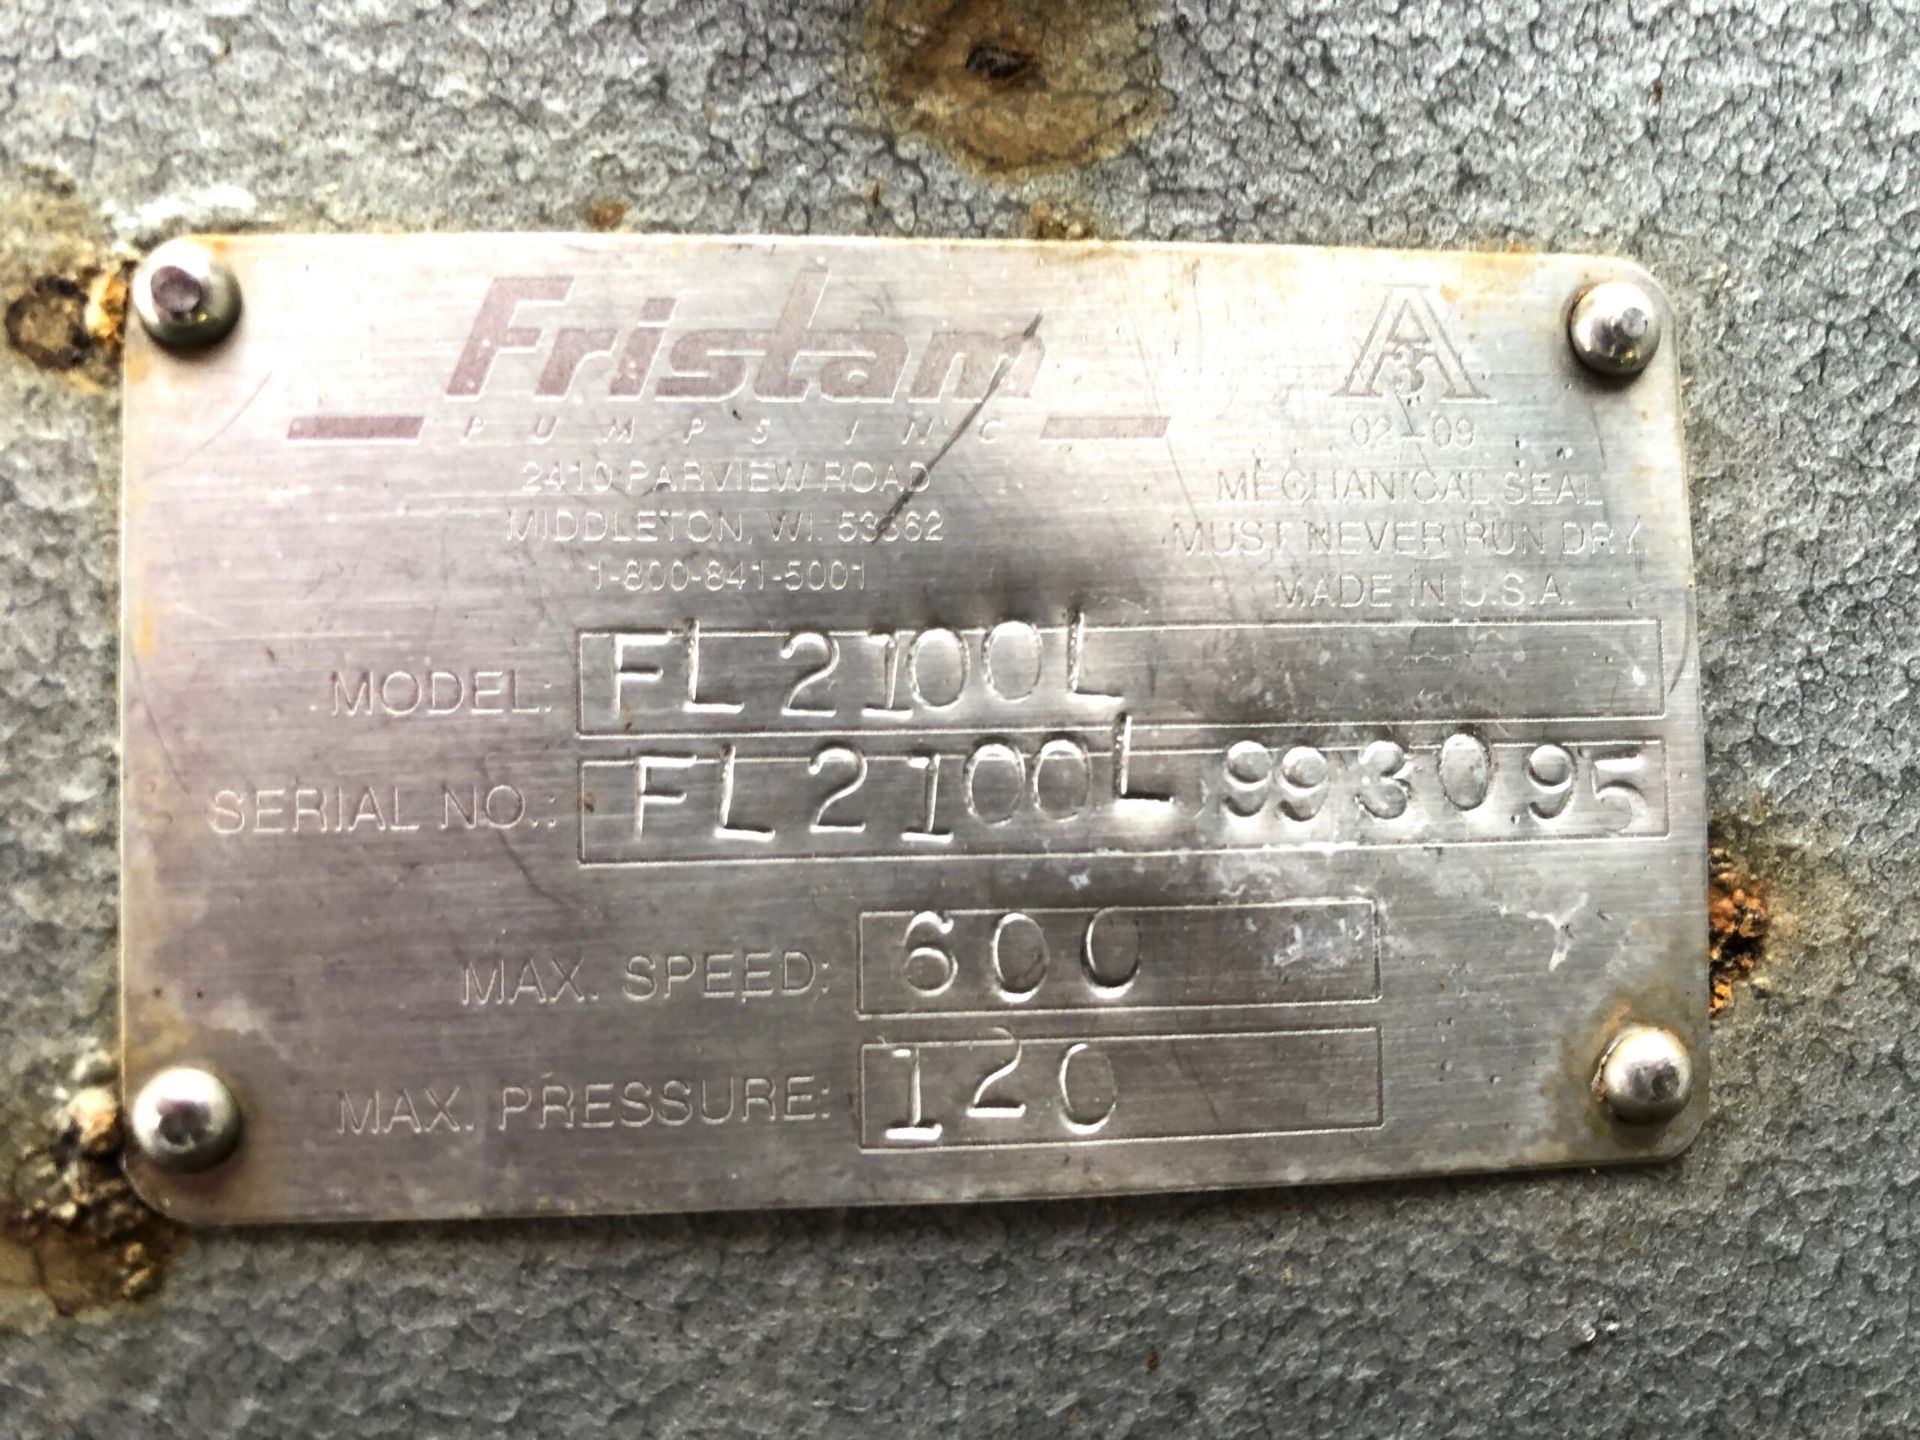 Fristam FL 2100L Positive Displacement Pump - Image 5 of 6